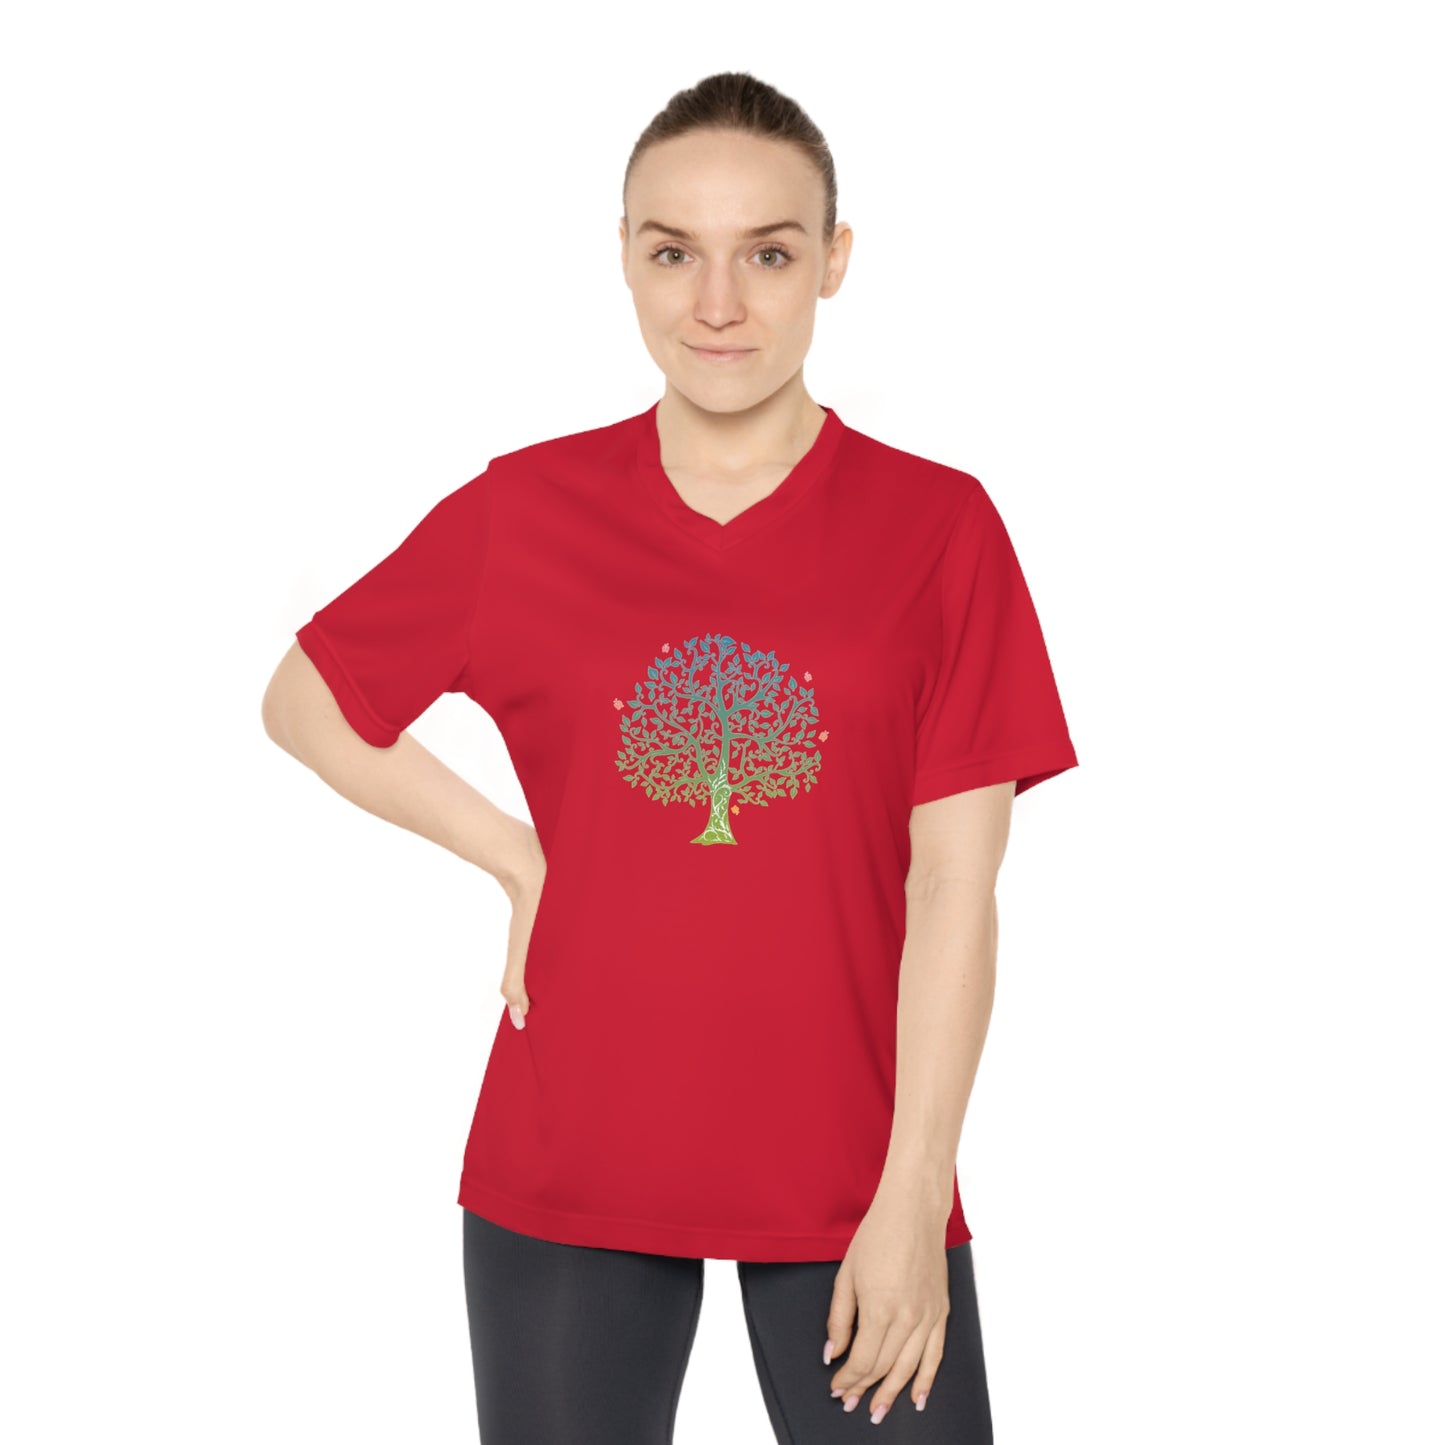 Tree of Life, Women's Performance V-Neck T-Shirt